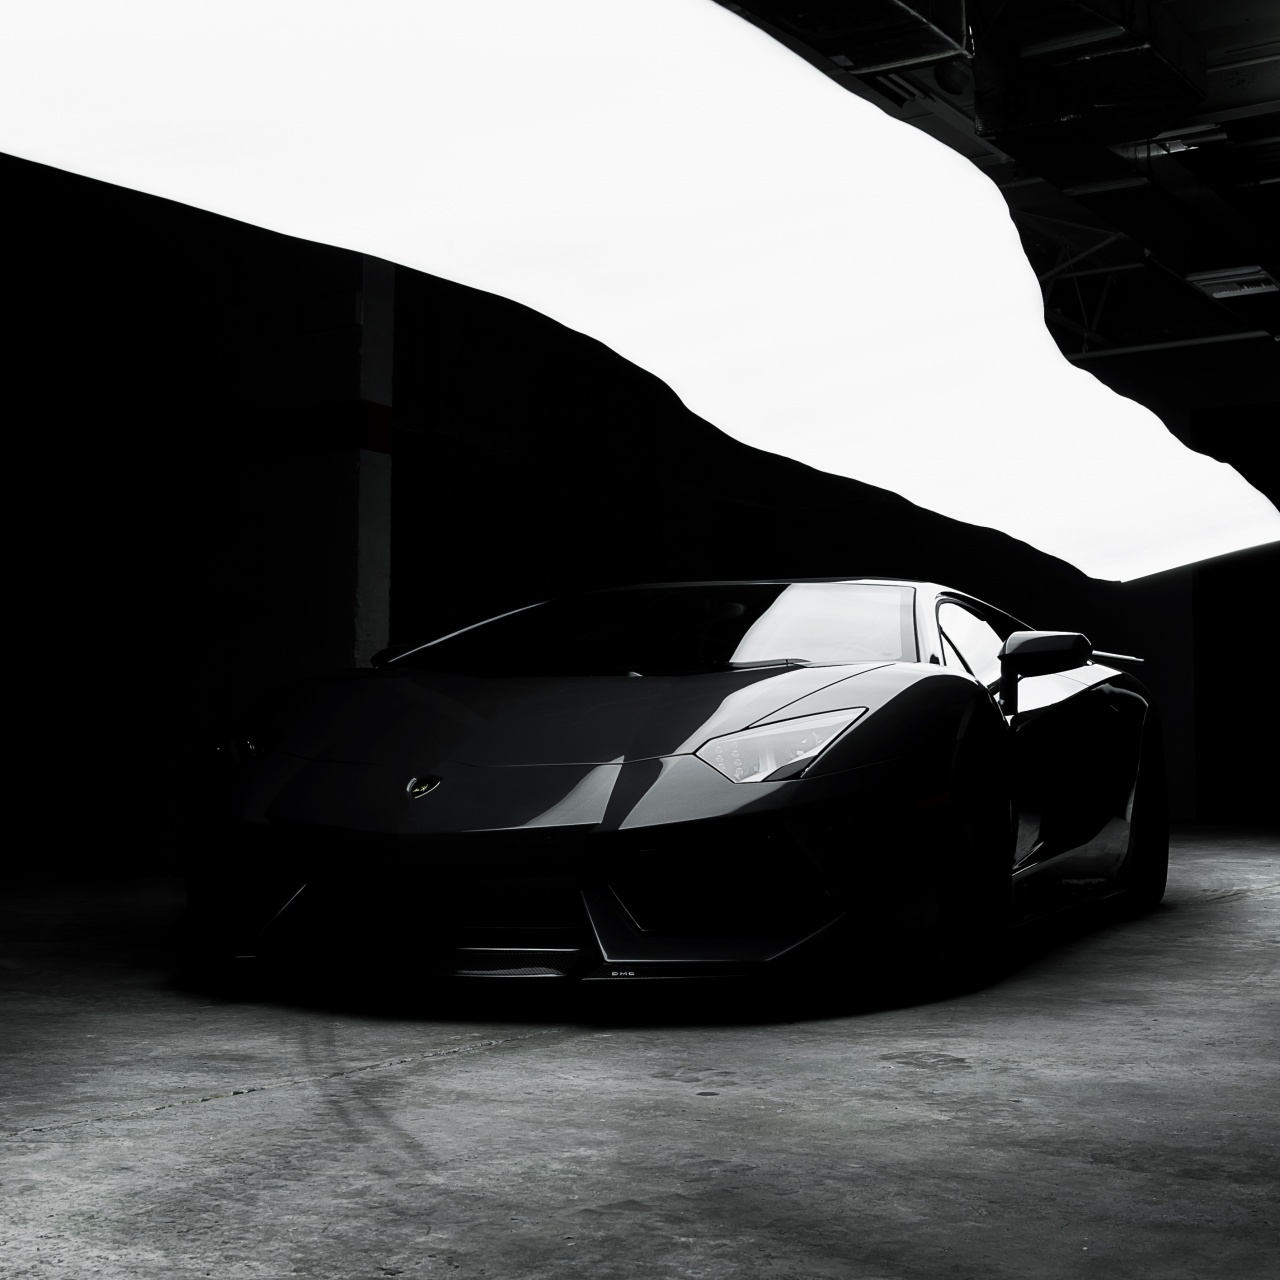 🔥 Dark Car Amoled Wallpaper 4k Ultra HD Free Download